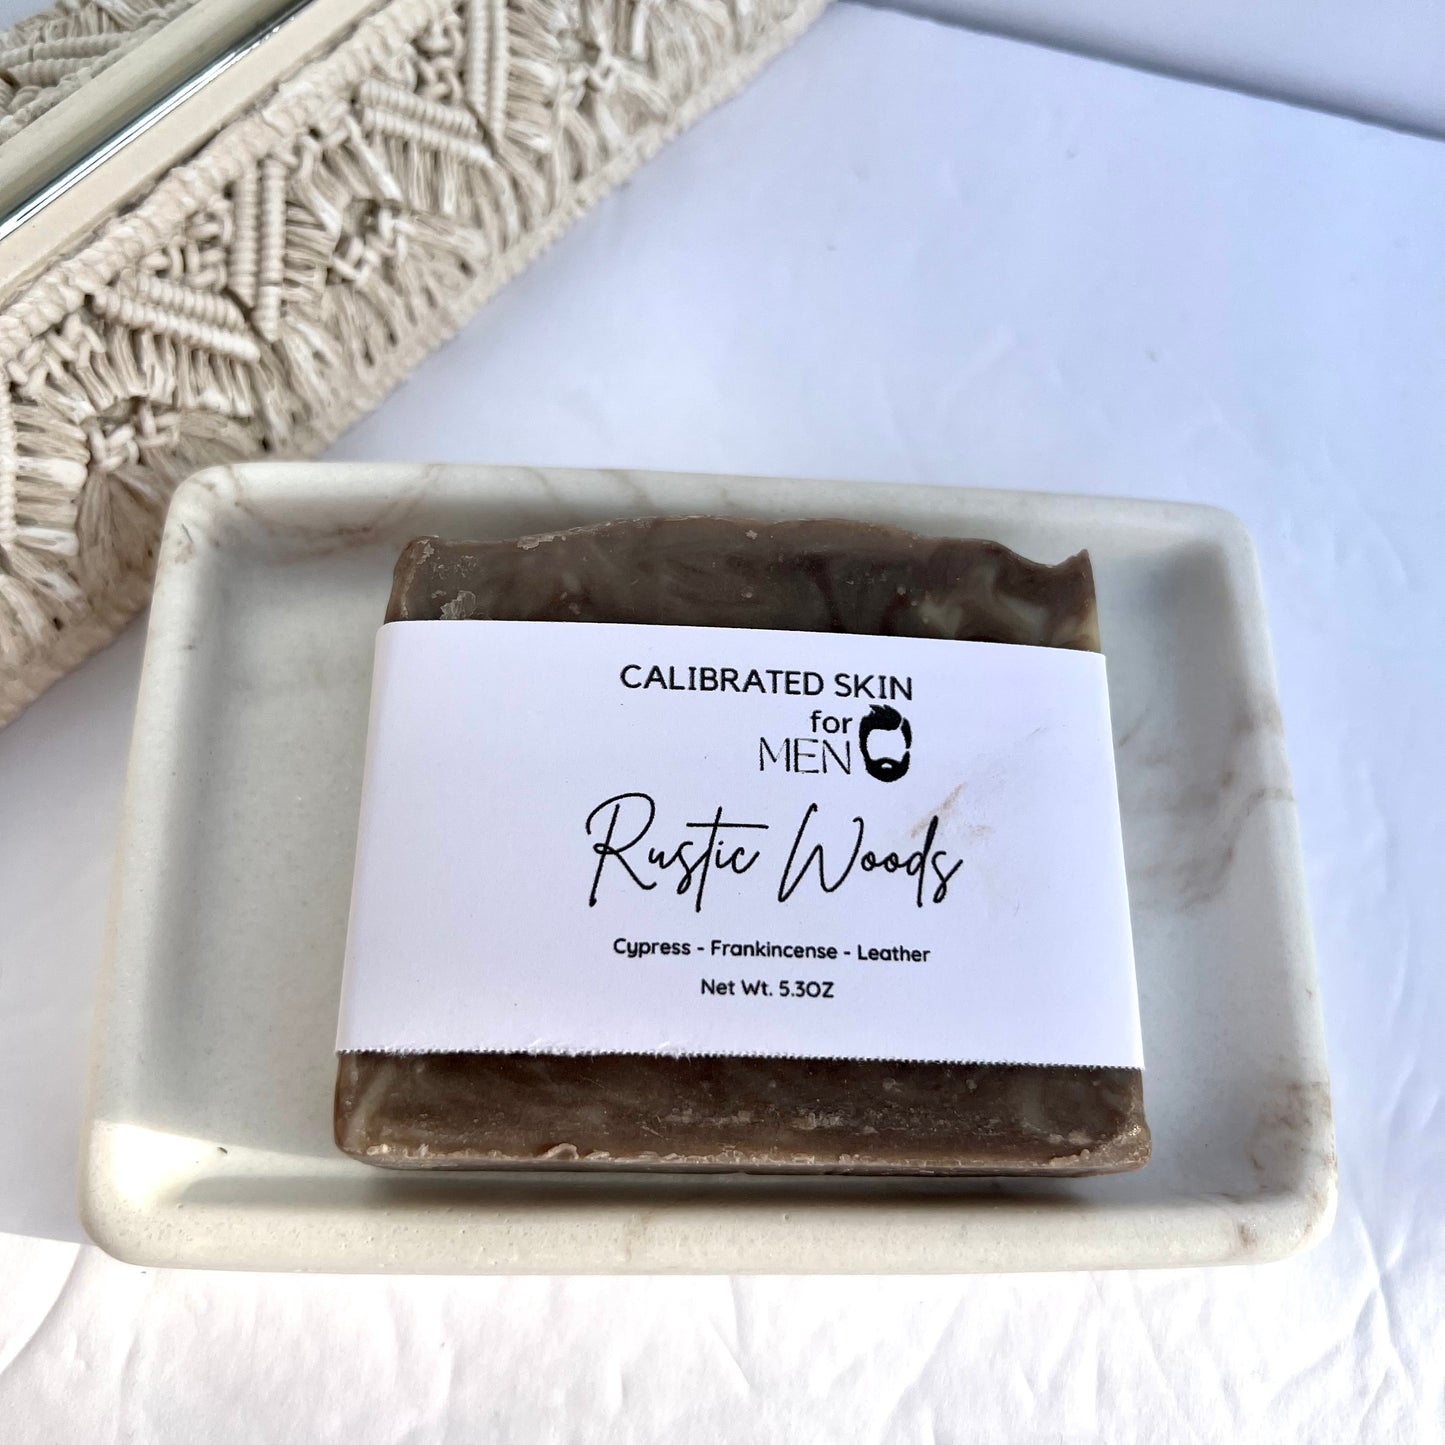 Rustic Woods Bar Soap (Goat Milk) - Cypress, Frankincense, Leather